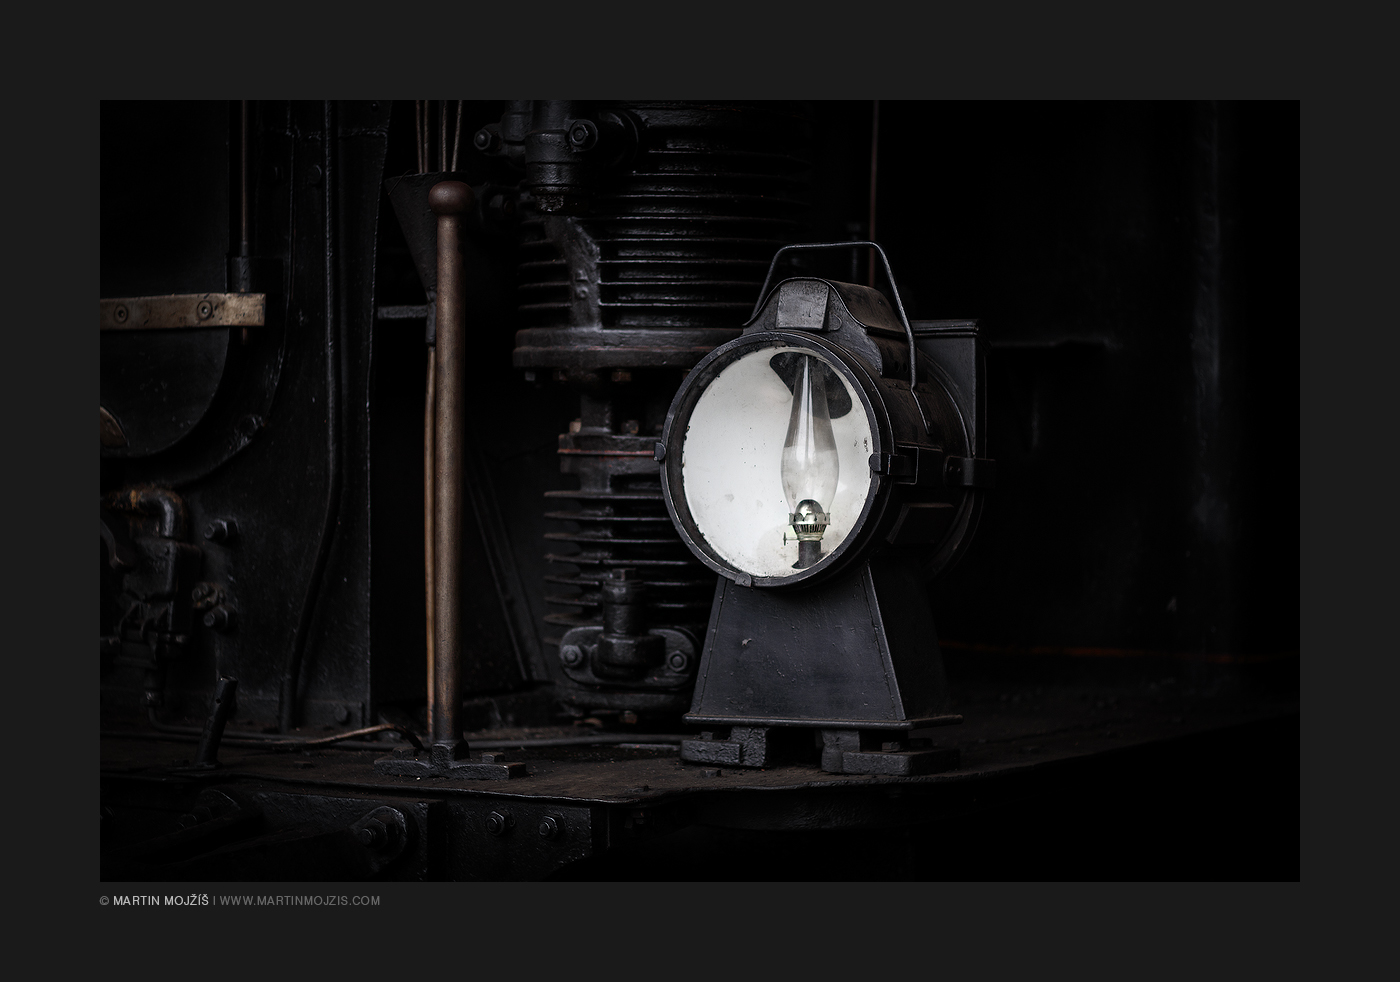 Another front reflector of a steam locomotive, here a kerosene lamp instead of a light bulb. Railway (railroad) museum in Luzna near Rakovnik.